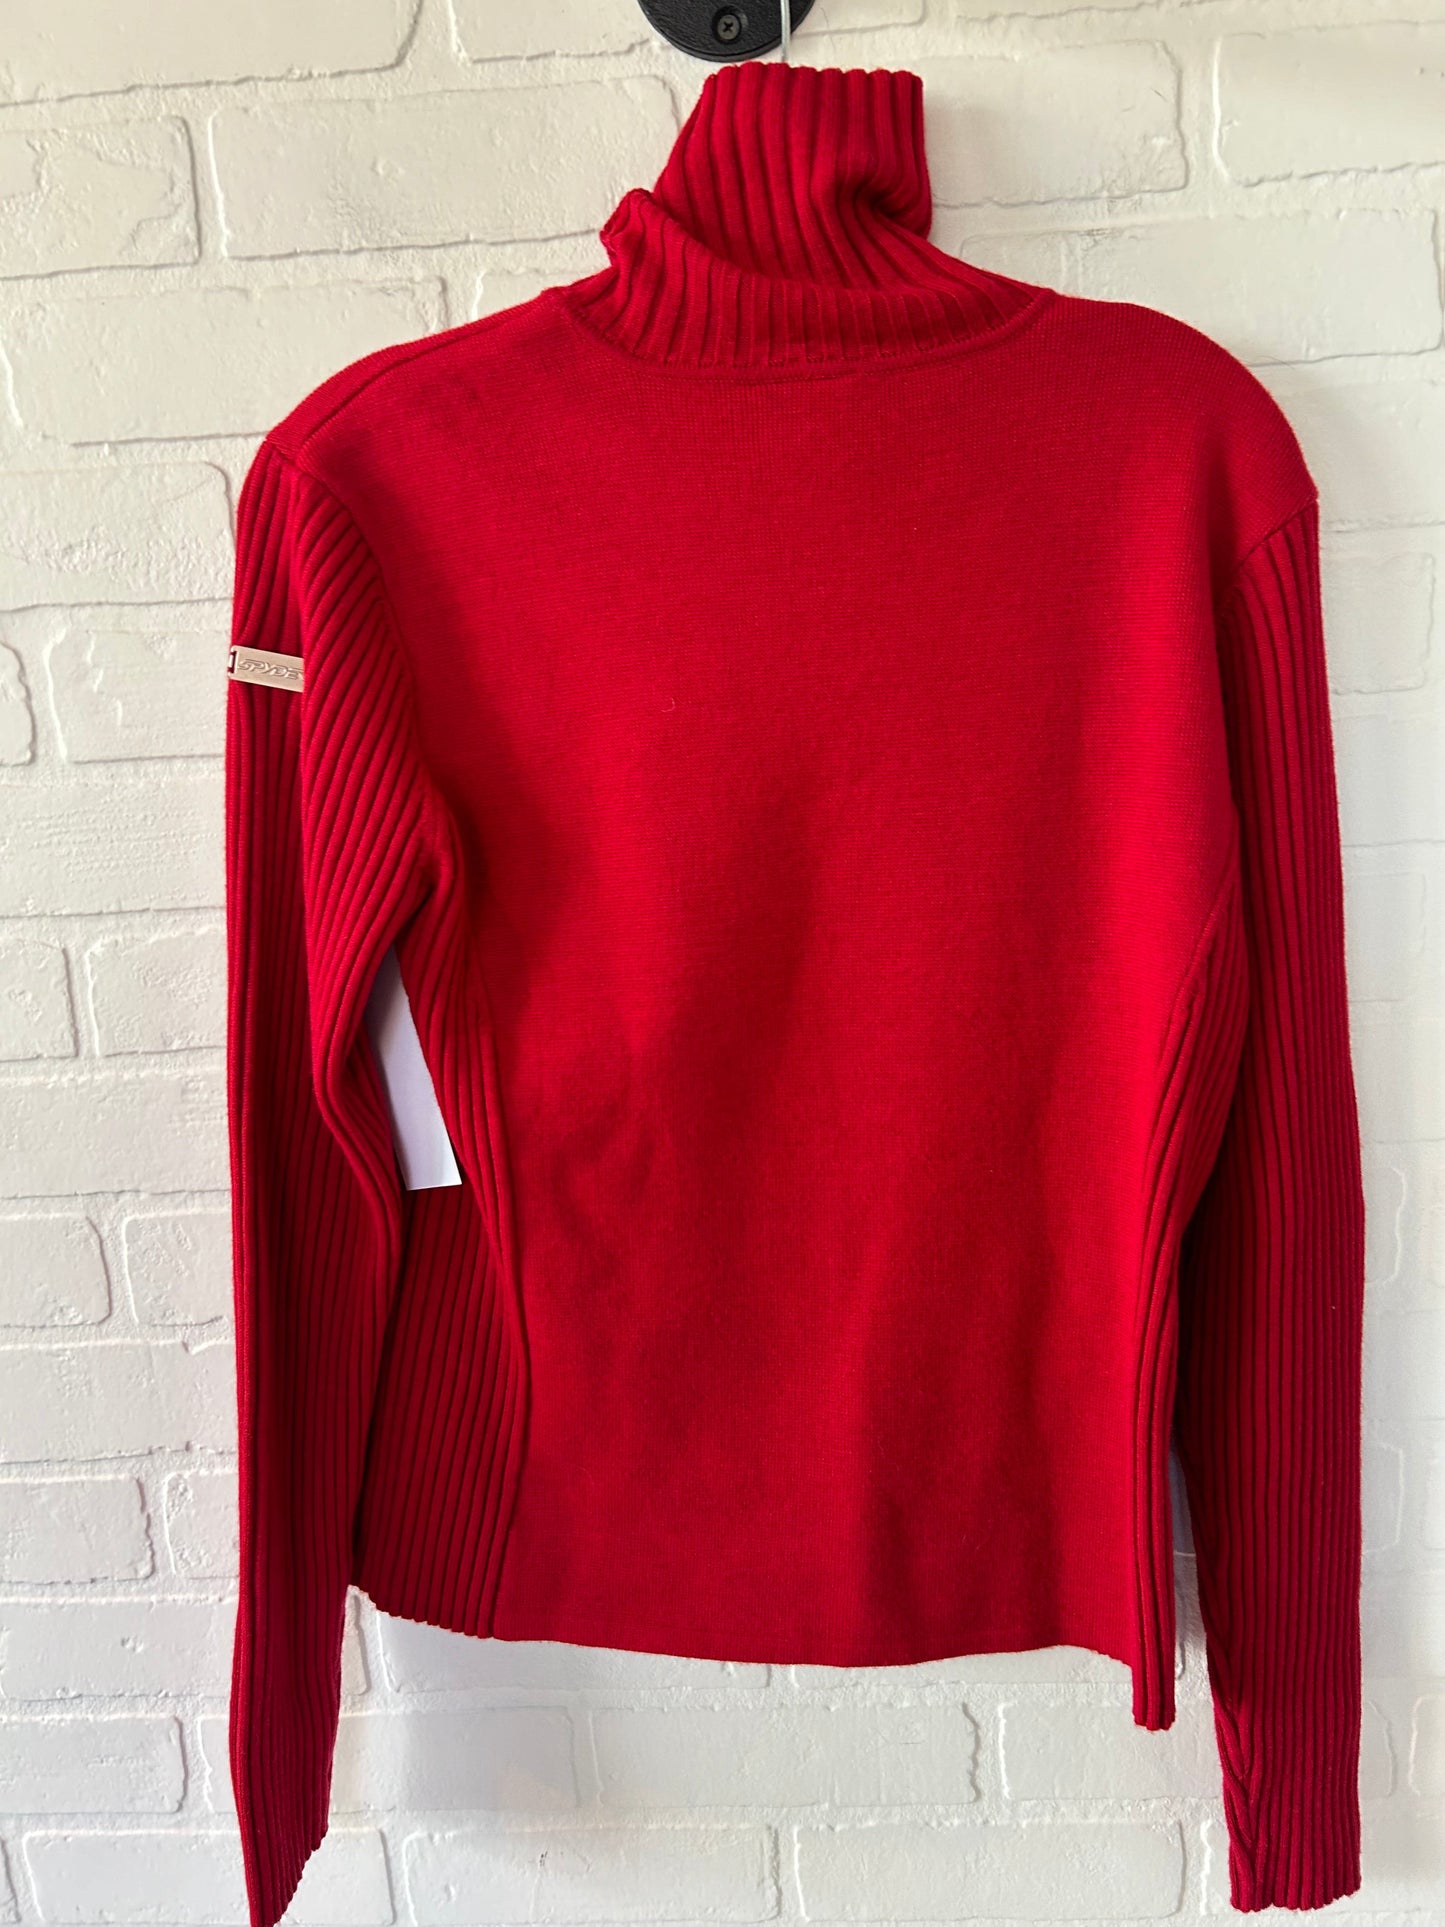 Sweater By Spyder  Size: S